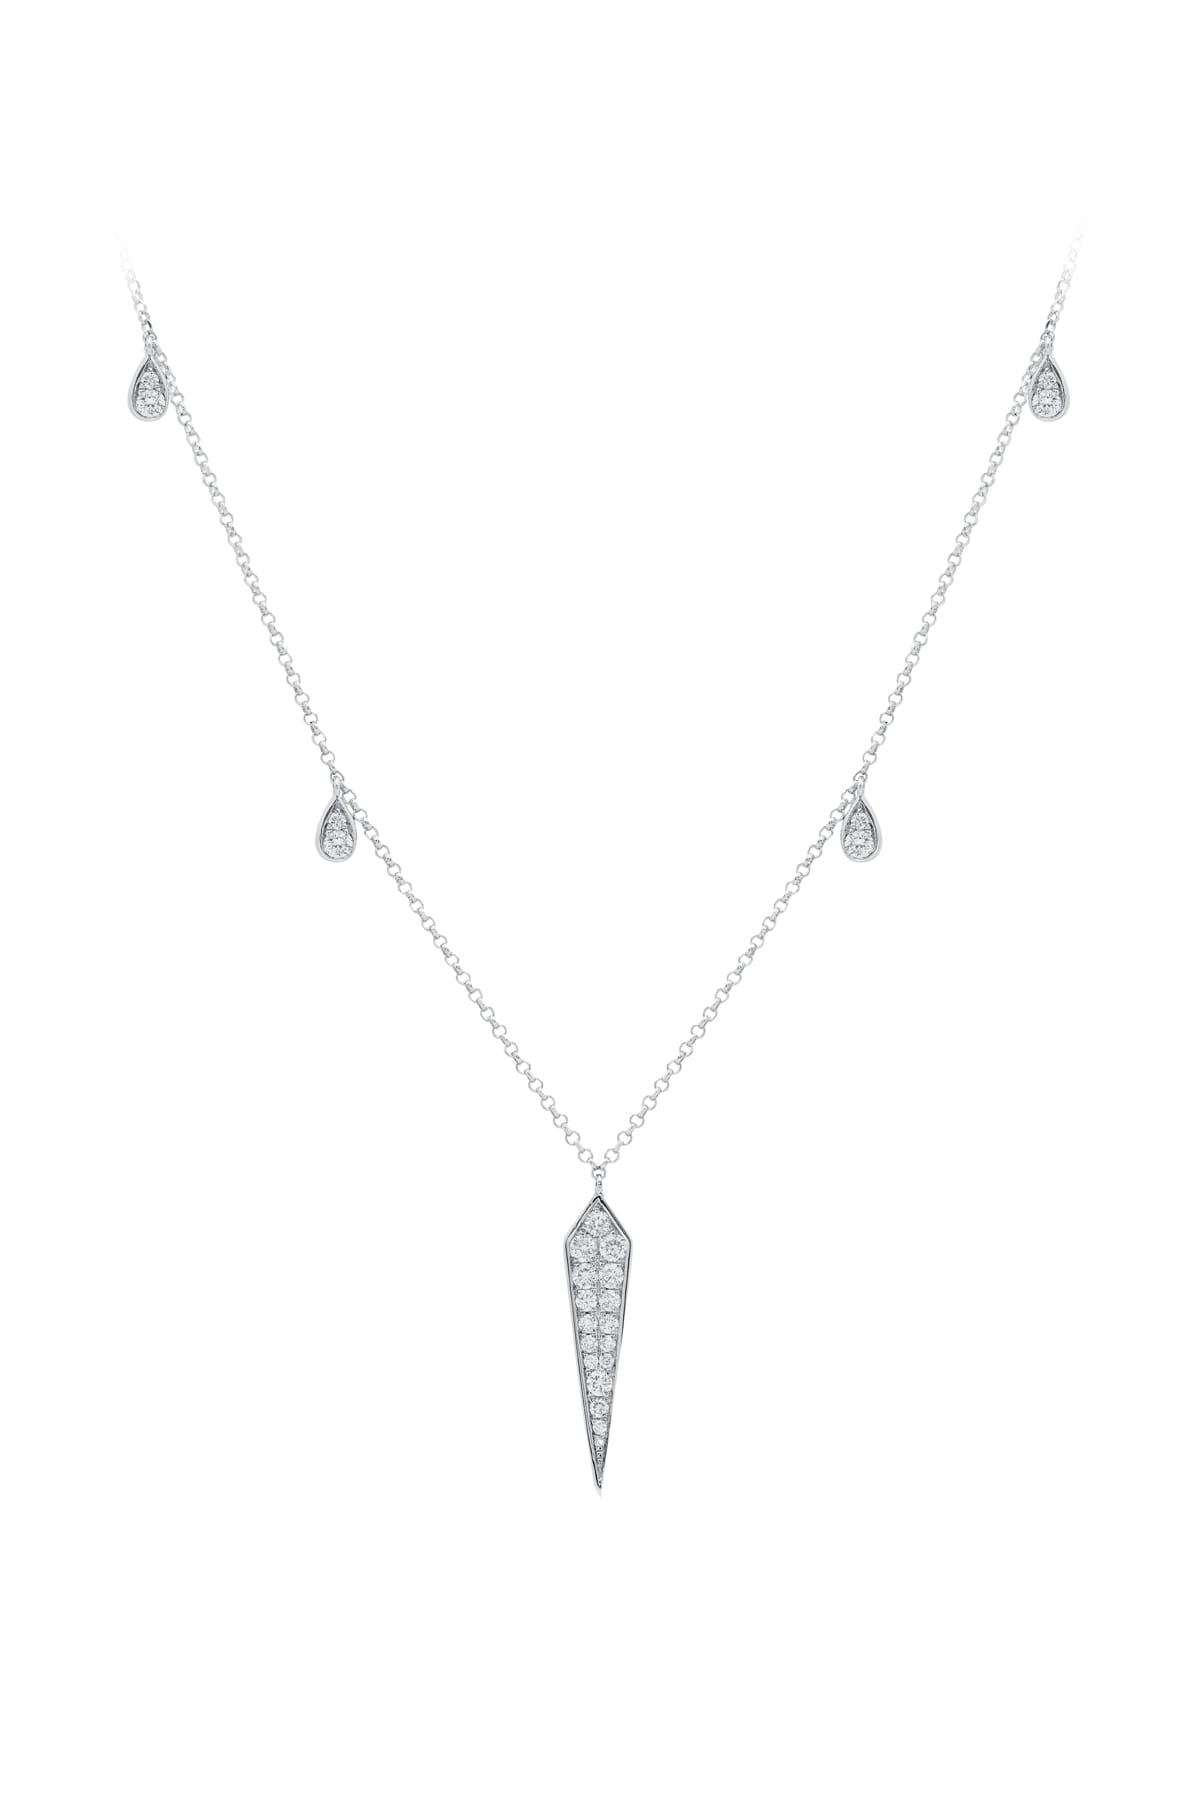 Teardrop Shaped Fancy Diamond Pendant In White Gold from LeGassick Jewellery Gold Coast.